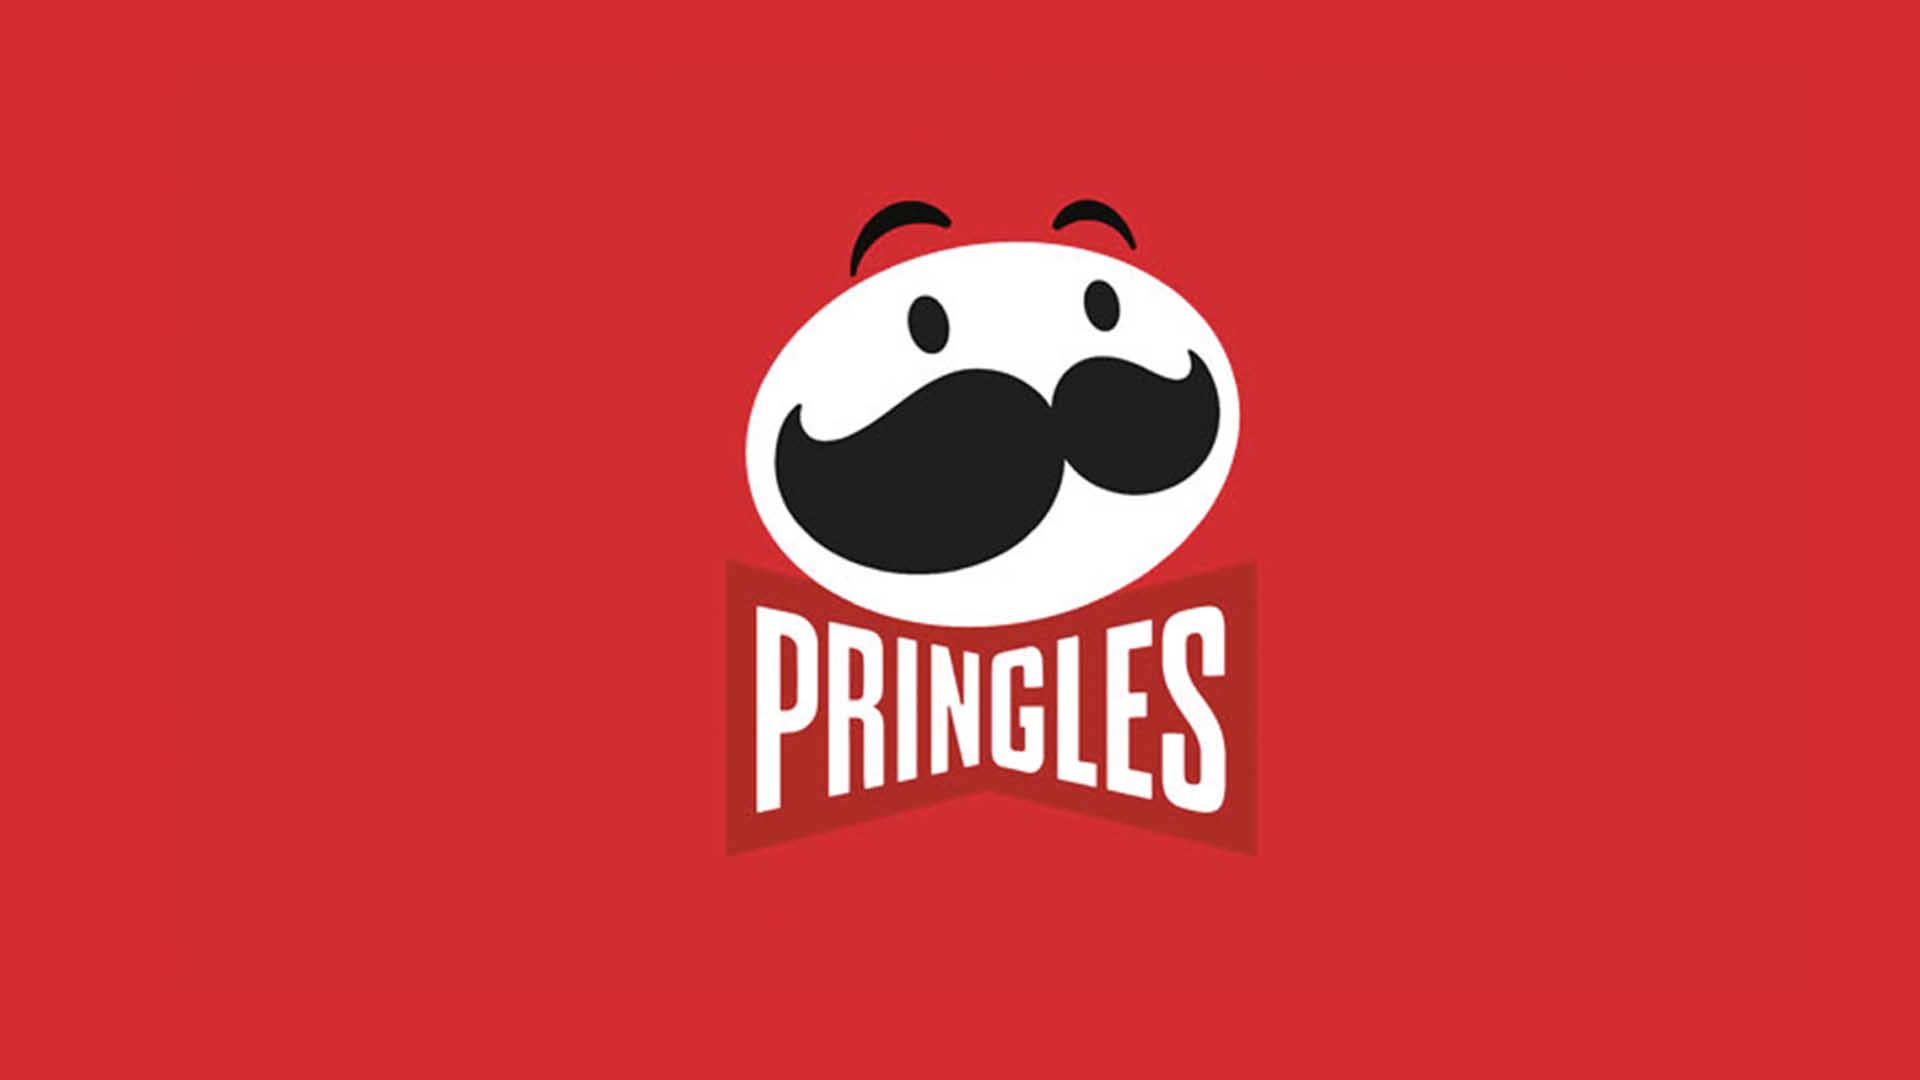 A Pringles logo